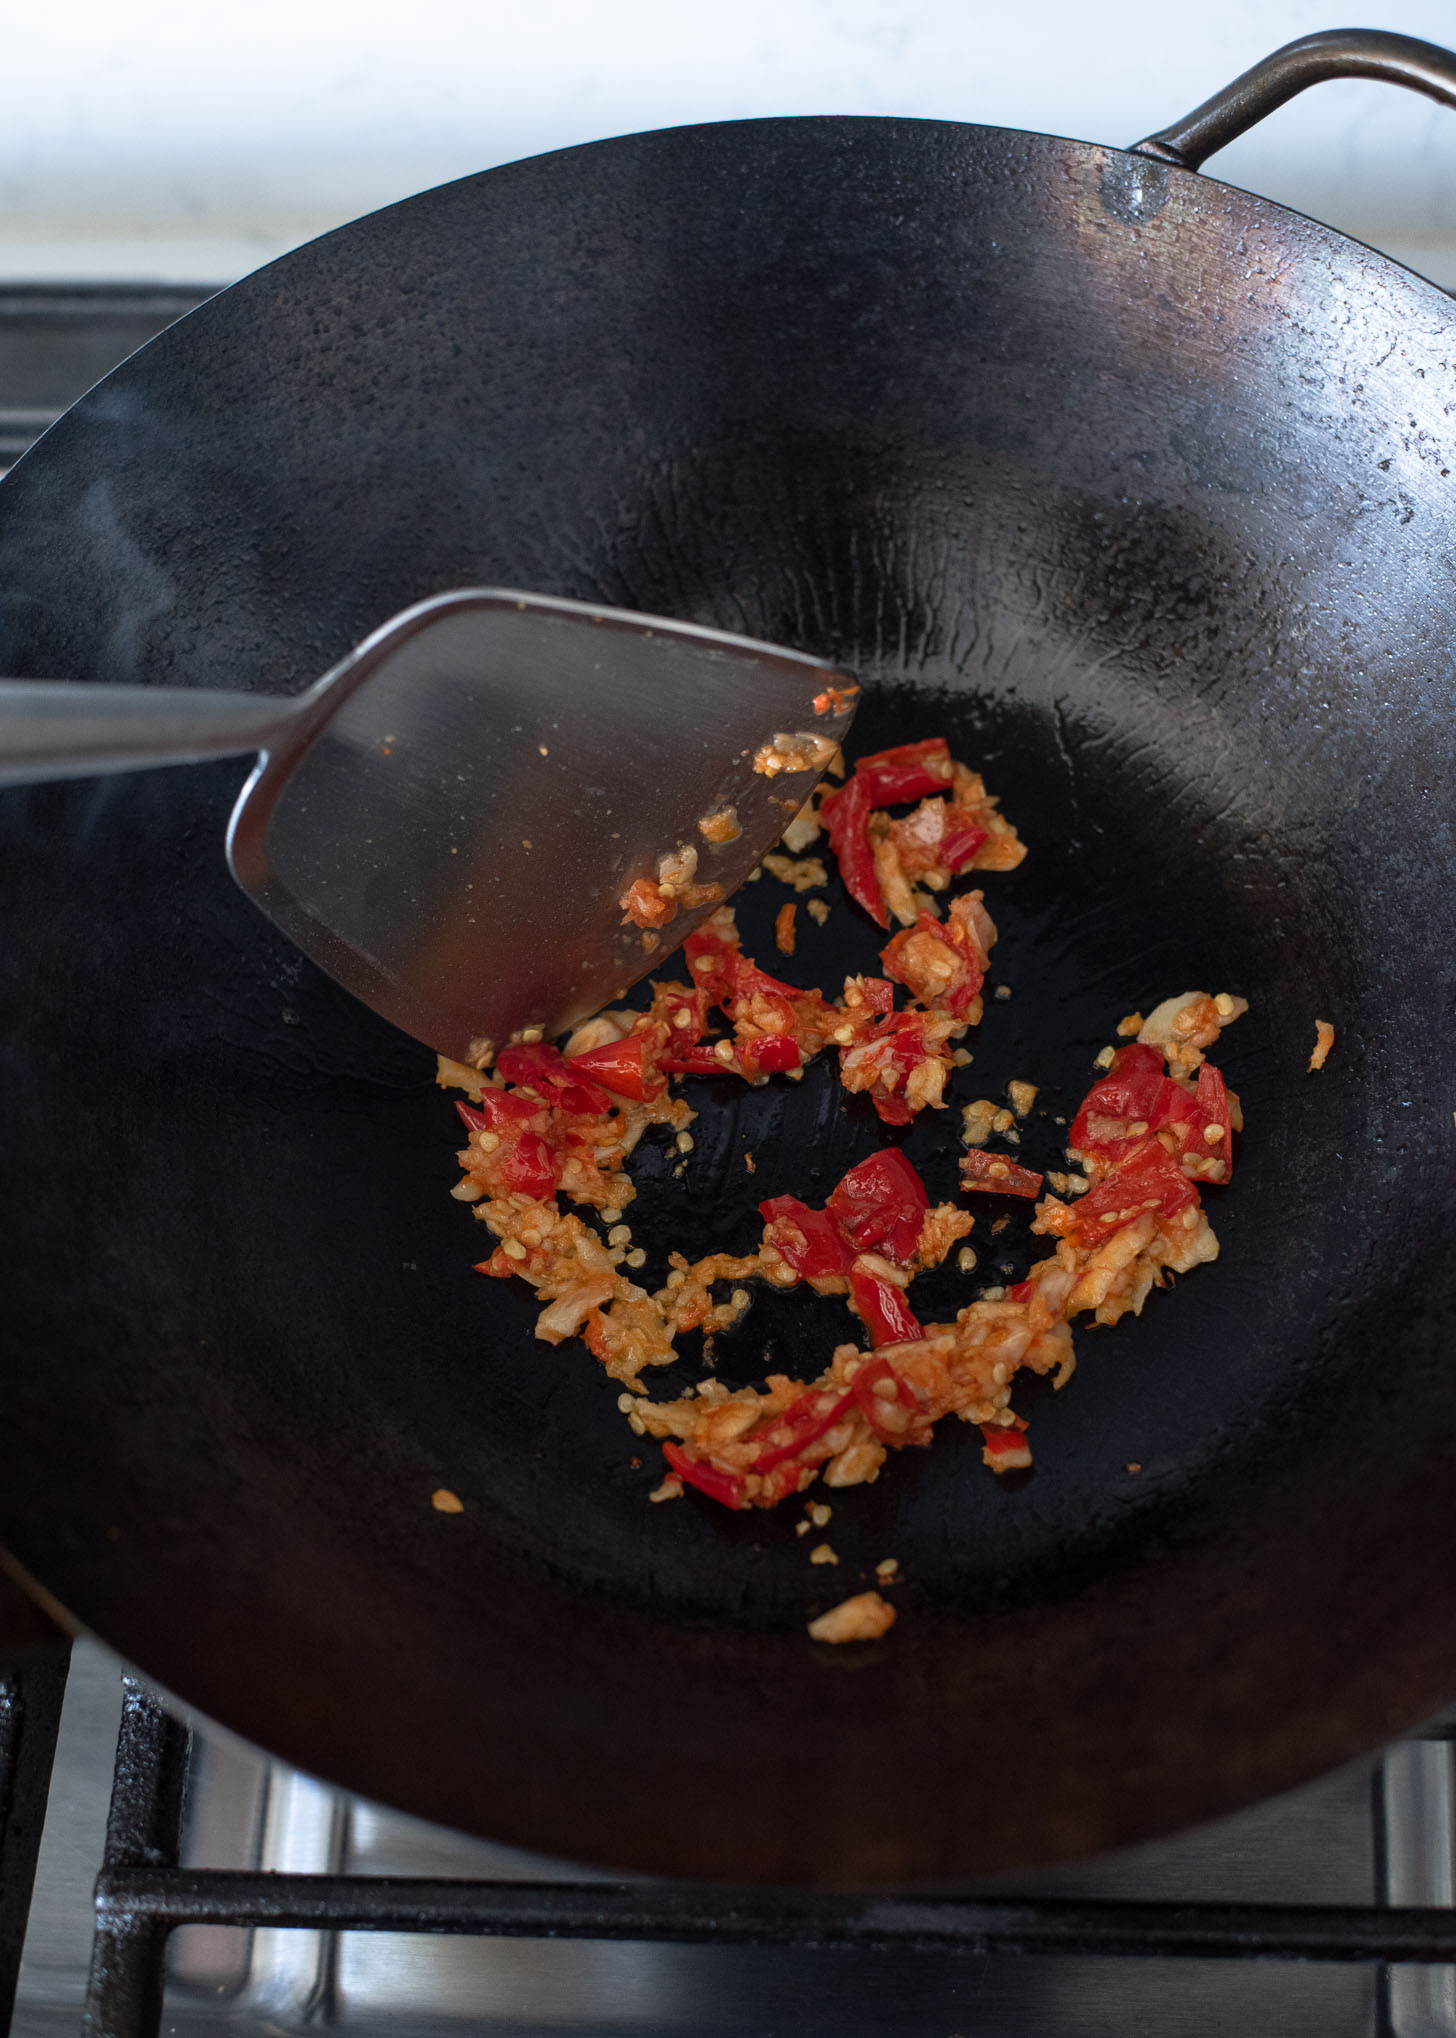 Garlic chili pastes are stir frying in a wok to make Thai basil beef..